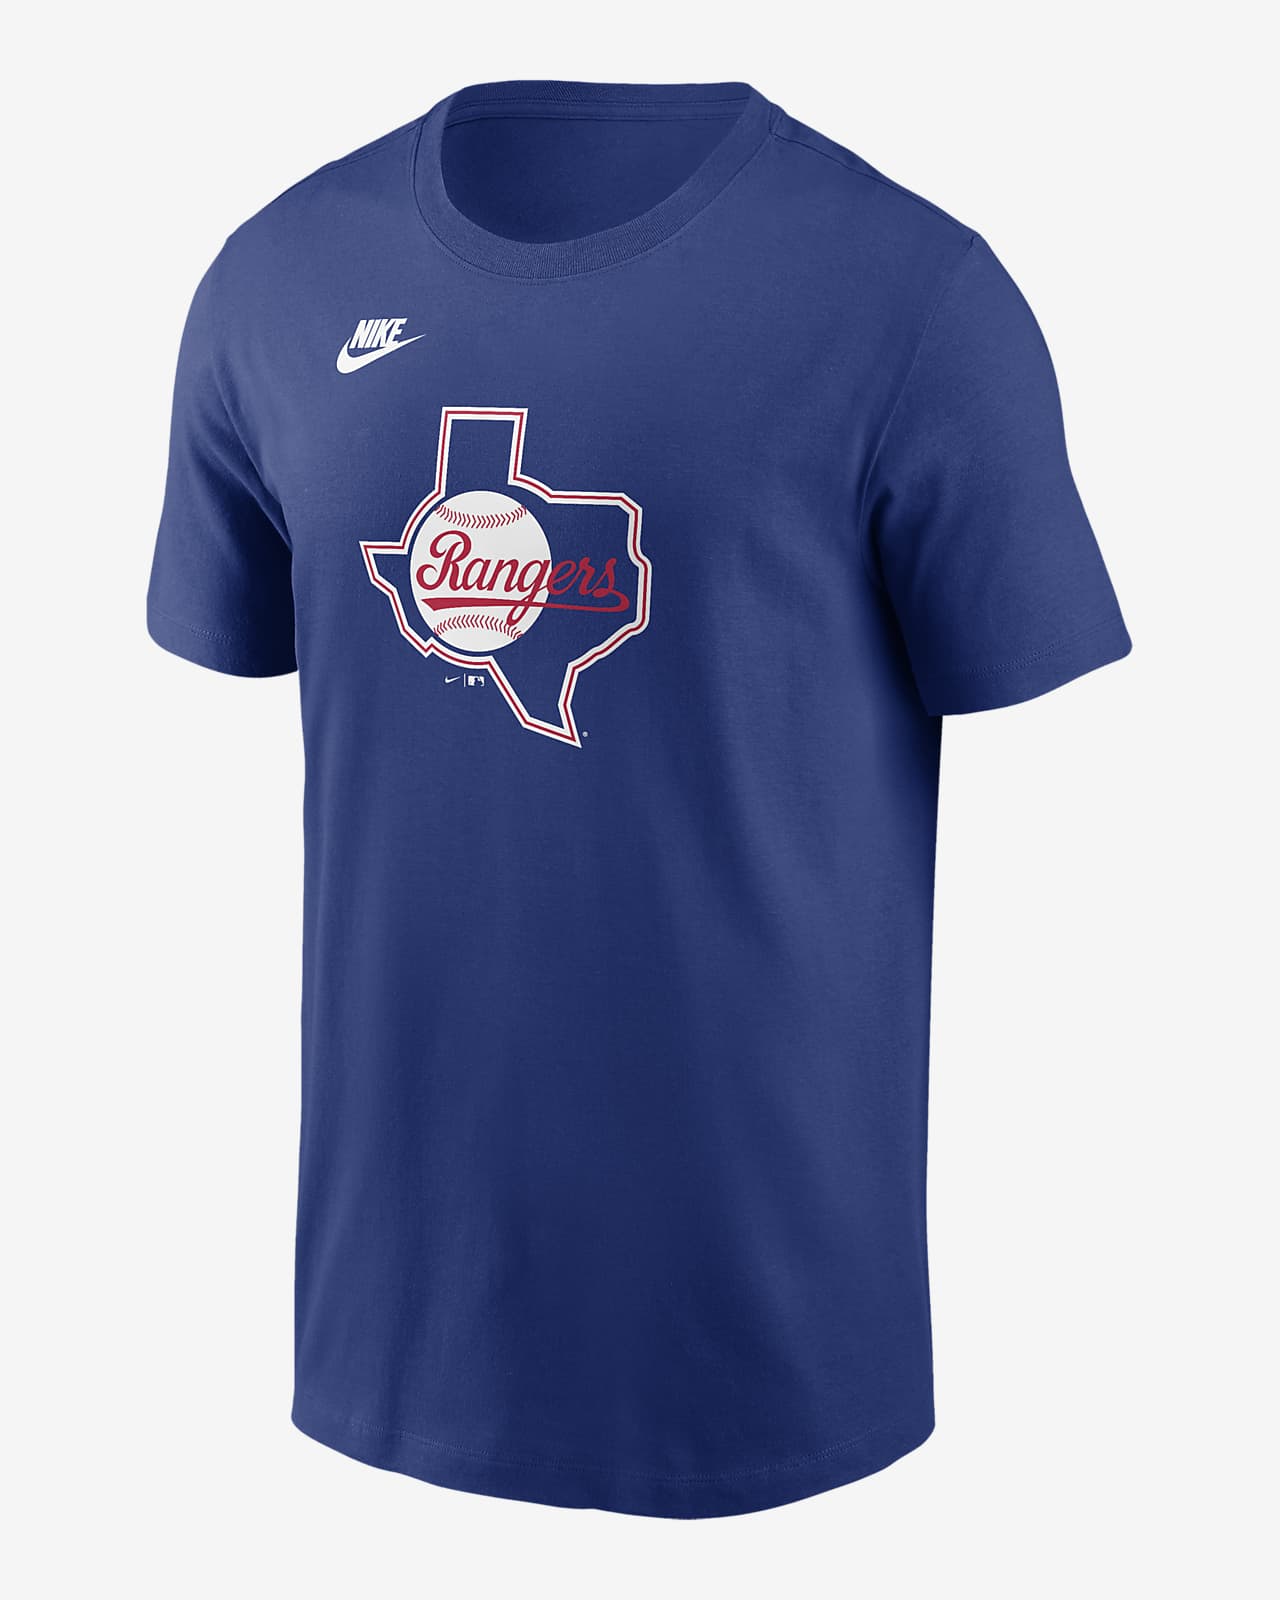 Playera Nike de la MLB para hombre Texas Rangers Cooperstown Logo